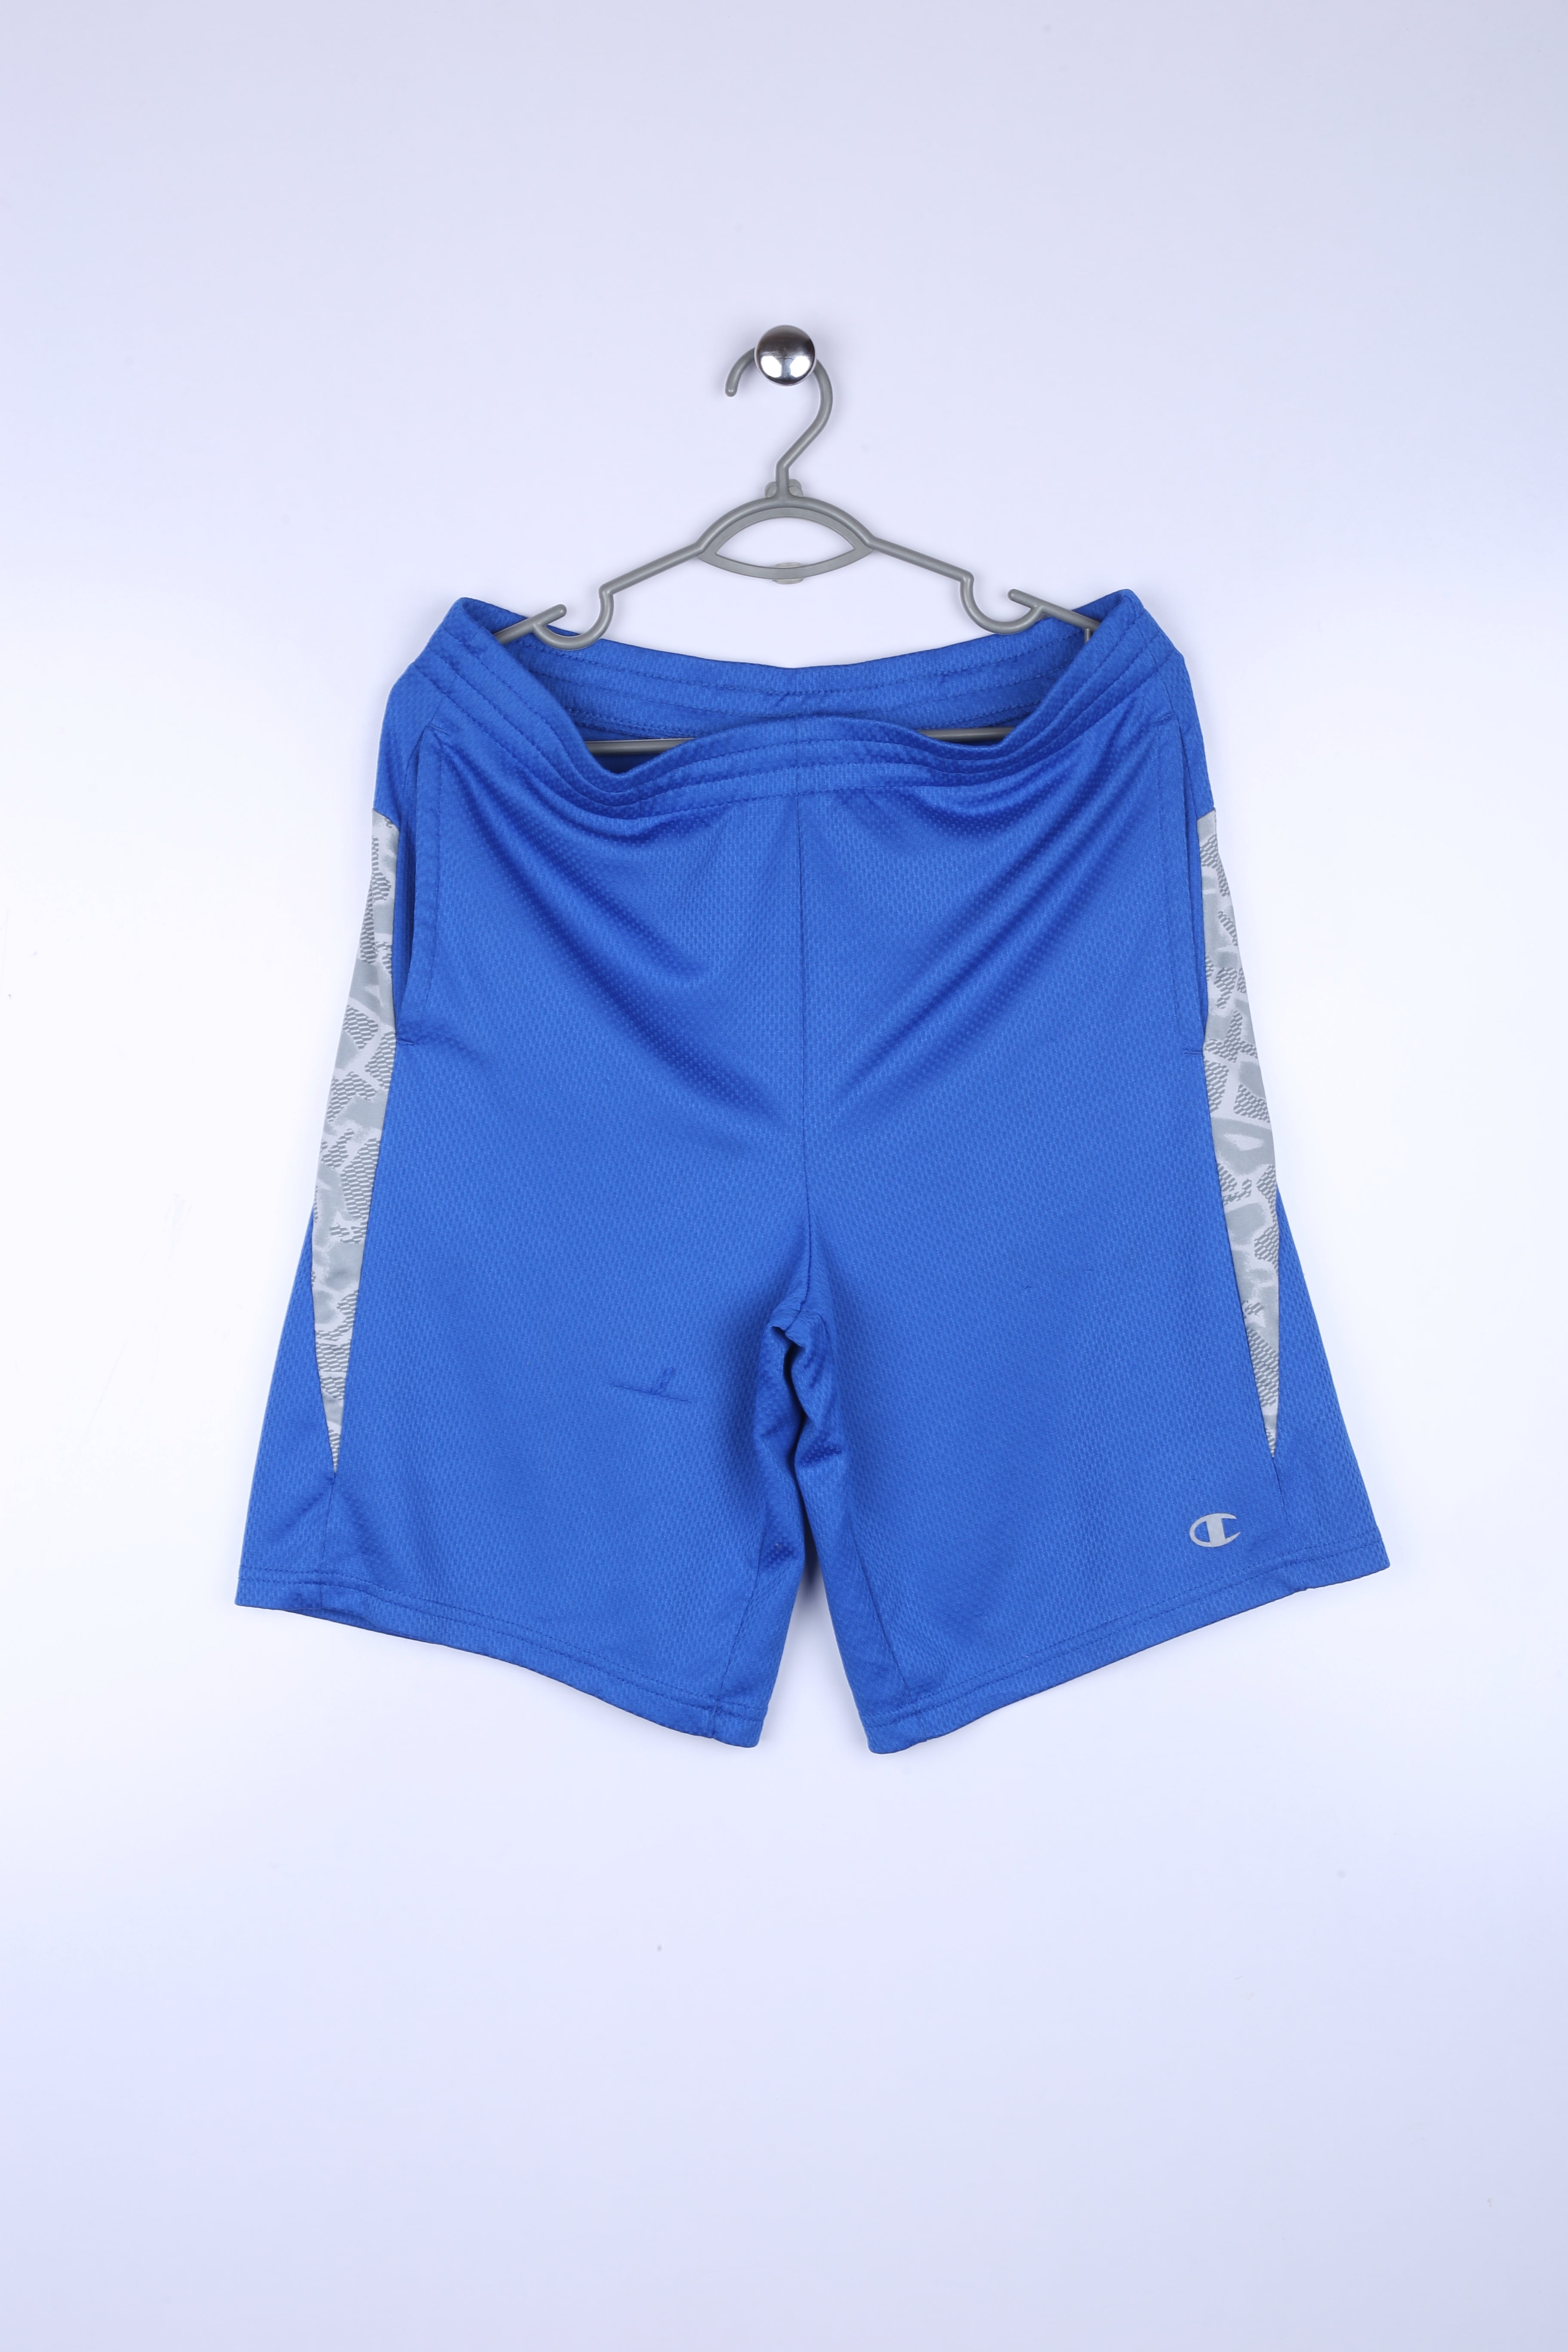 Vintage Champion Shorts Blue